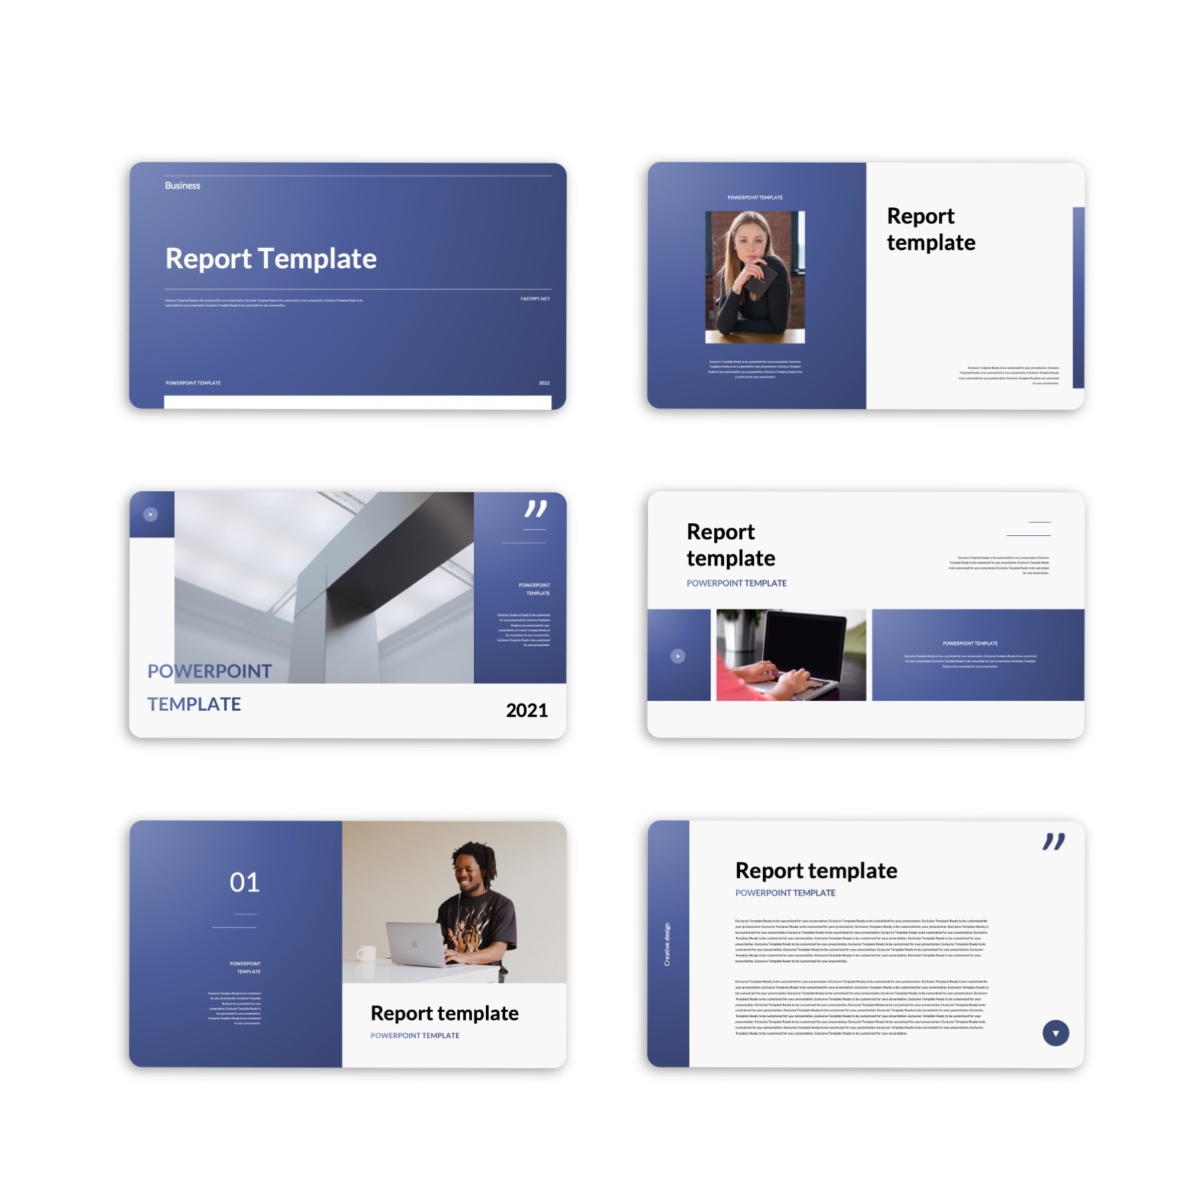 Google Slides-Brand Clean Business Presentation Template